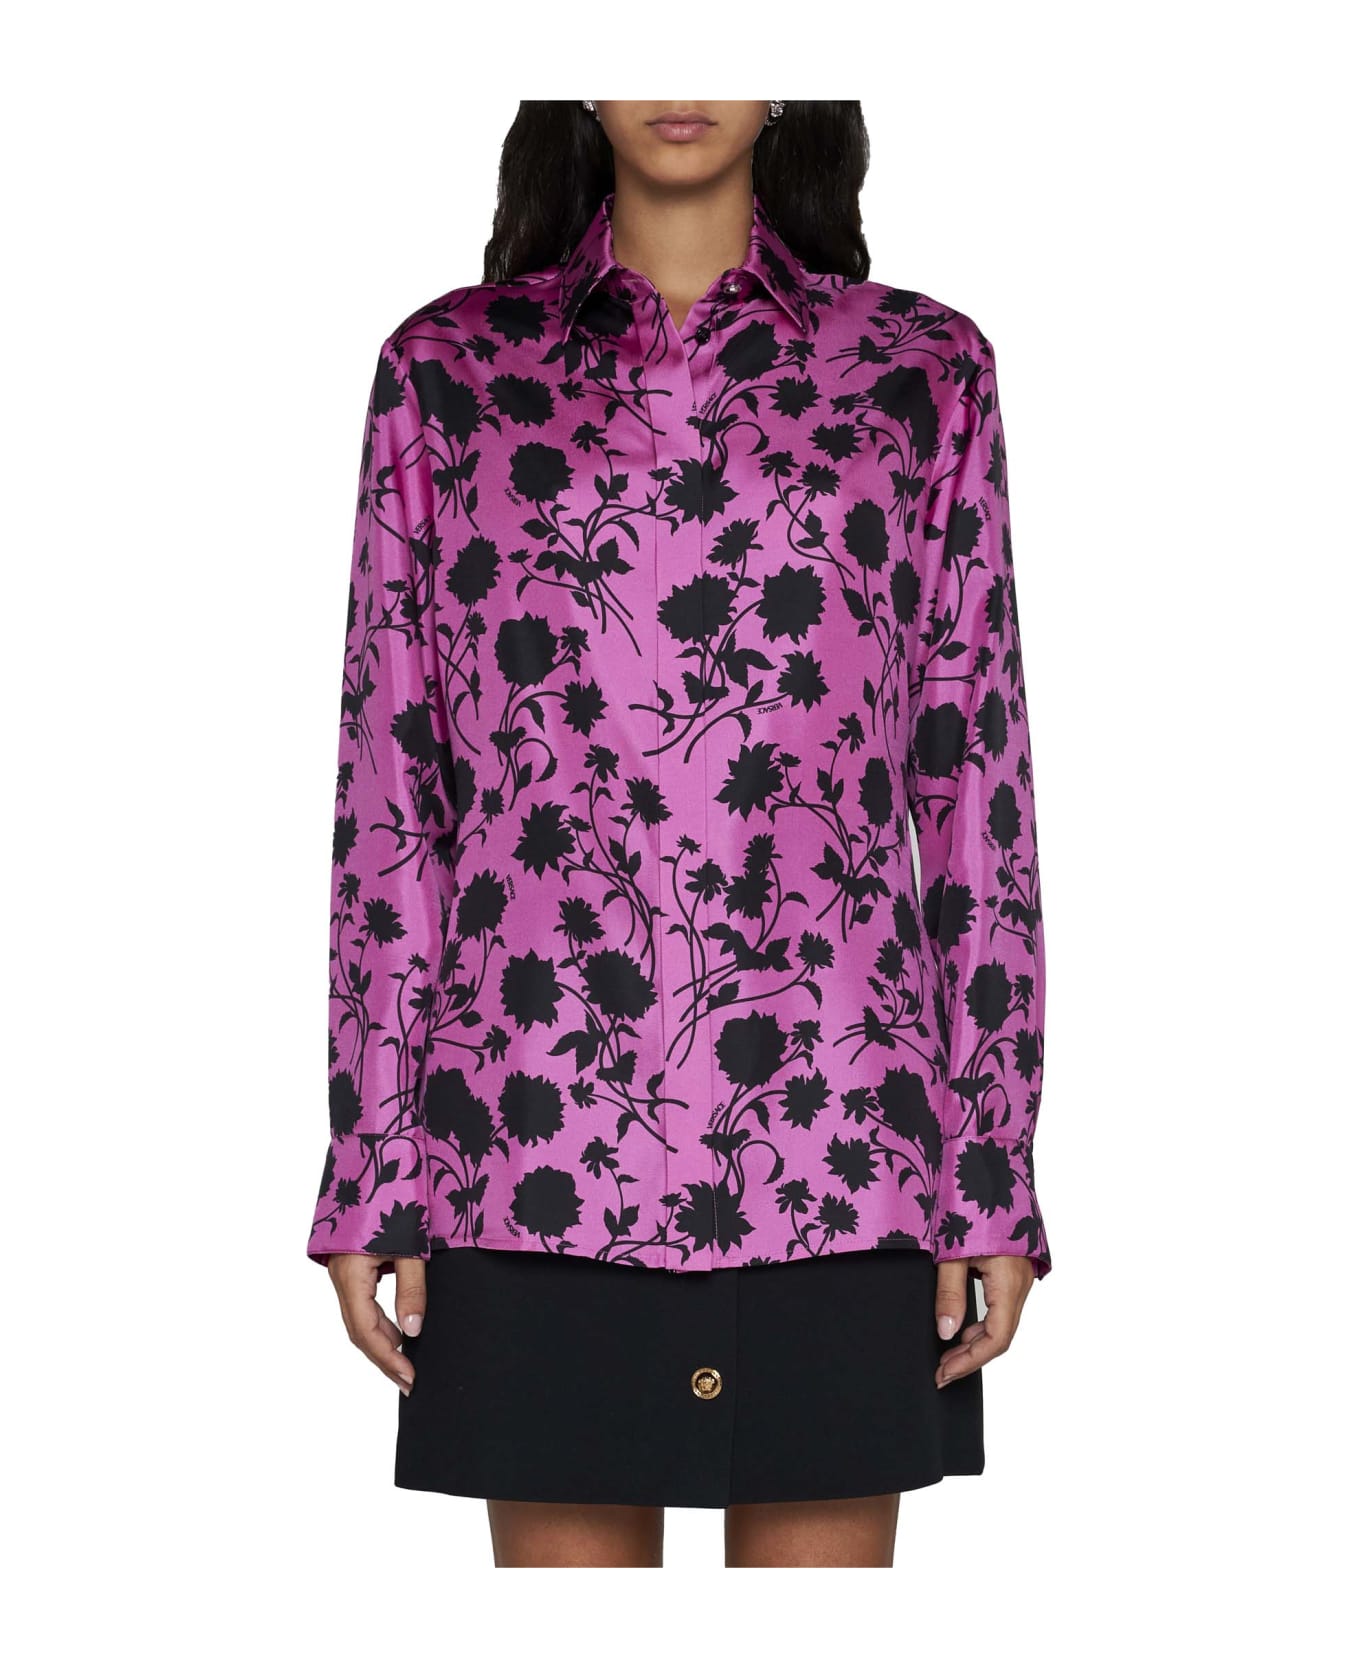 Versace Informal Shirt Floral Silhouette Print Twill Silk Fabric 50% - Waterlily Black